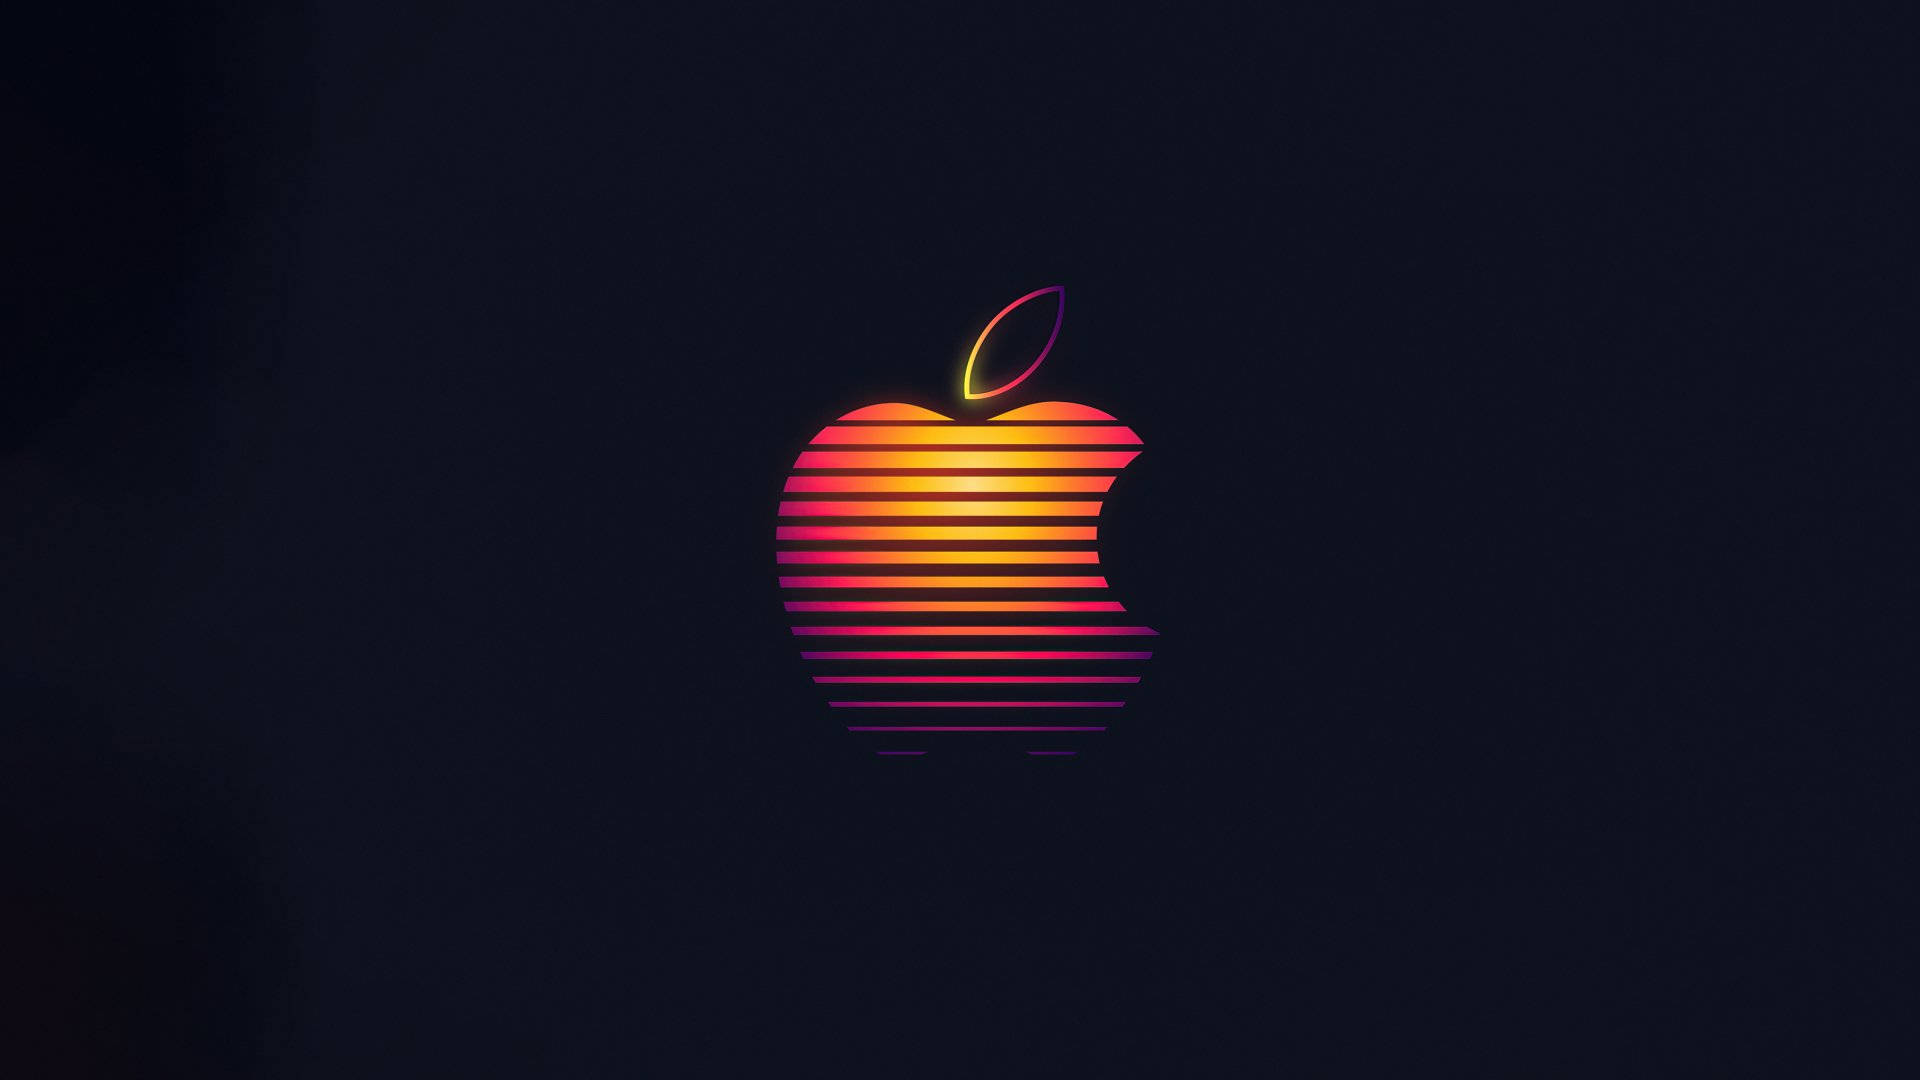 Glowing Apple Logo Background